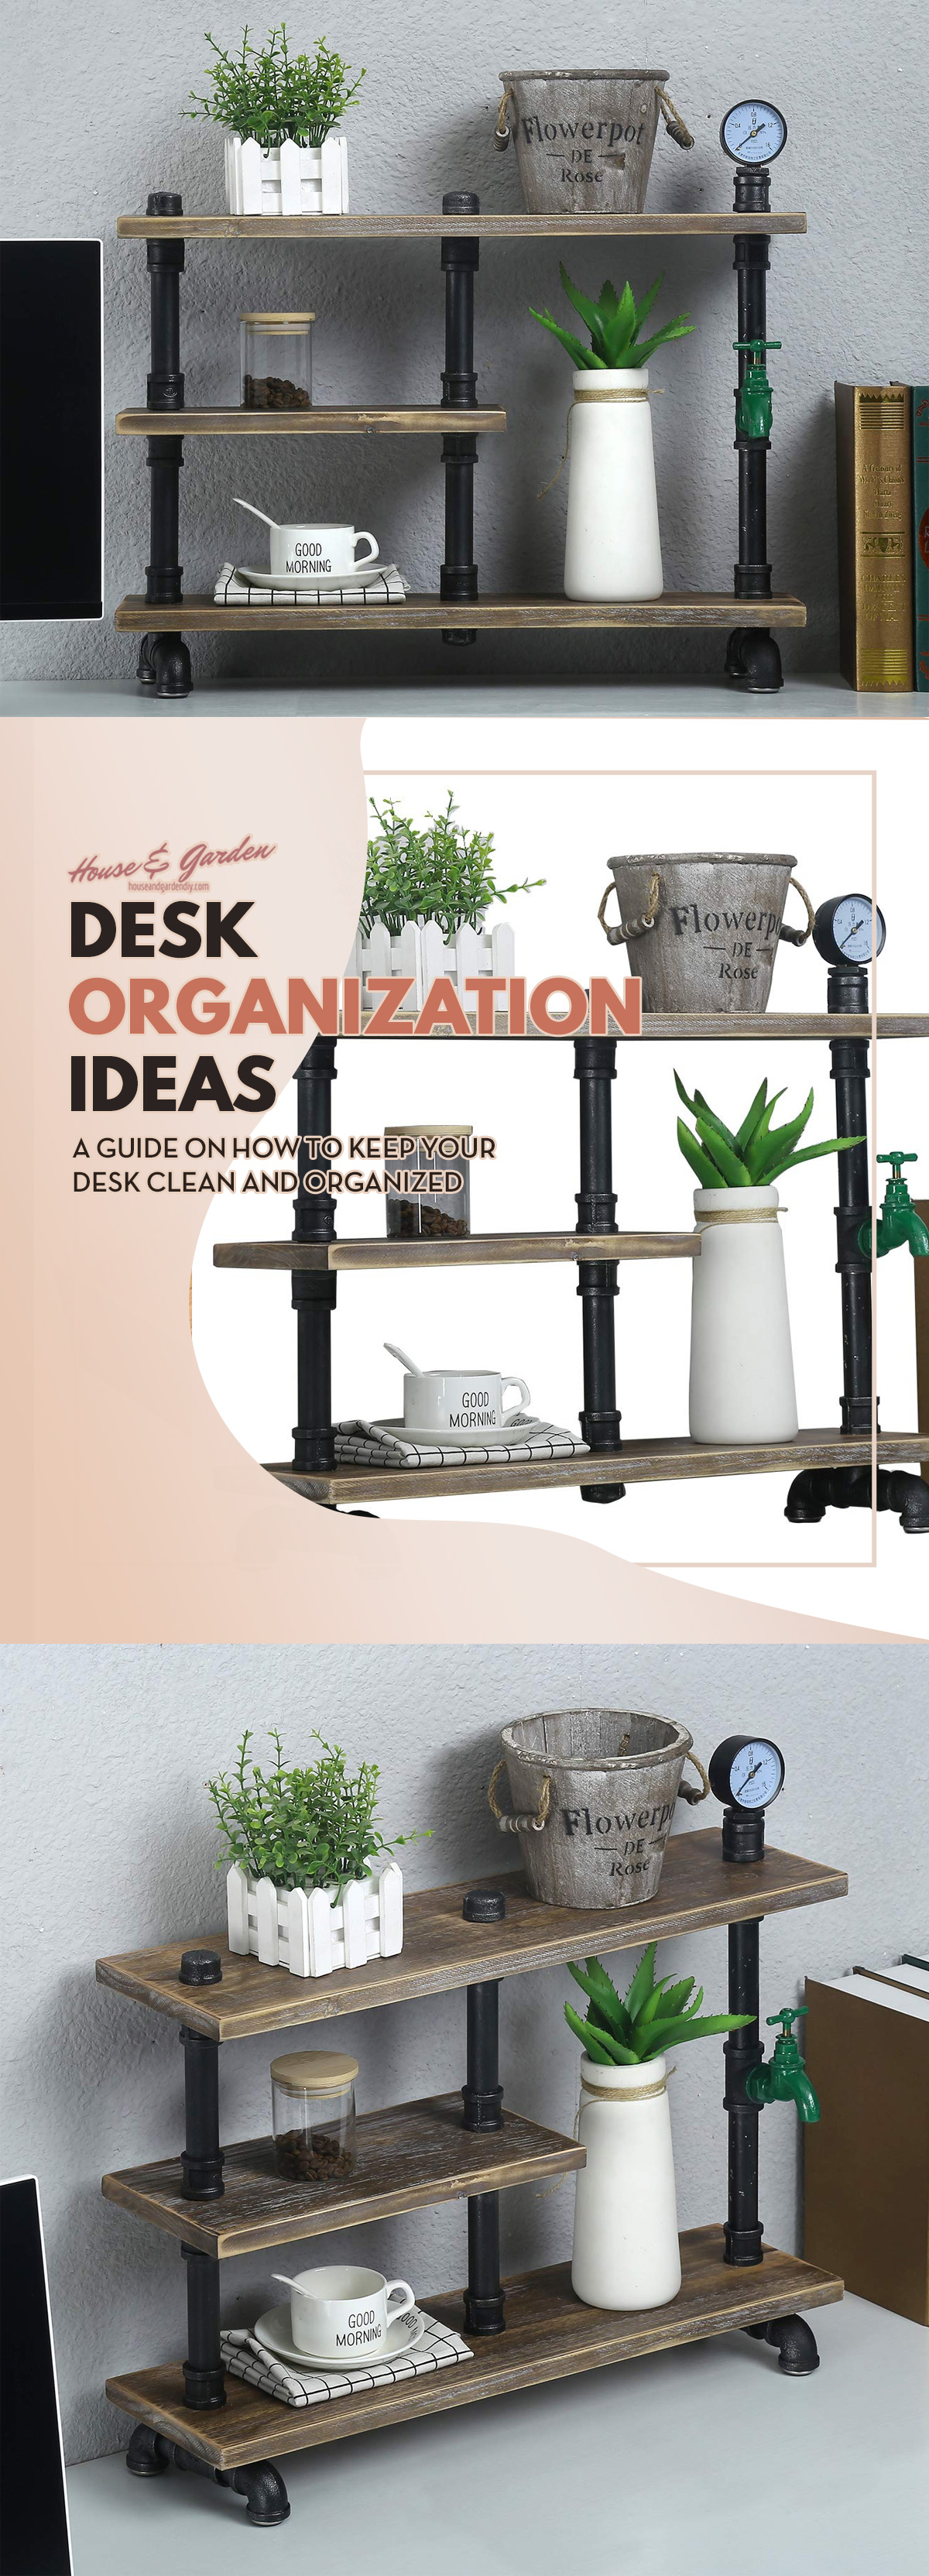 small desk organization ideas